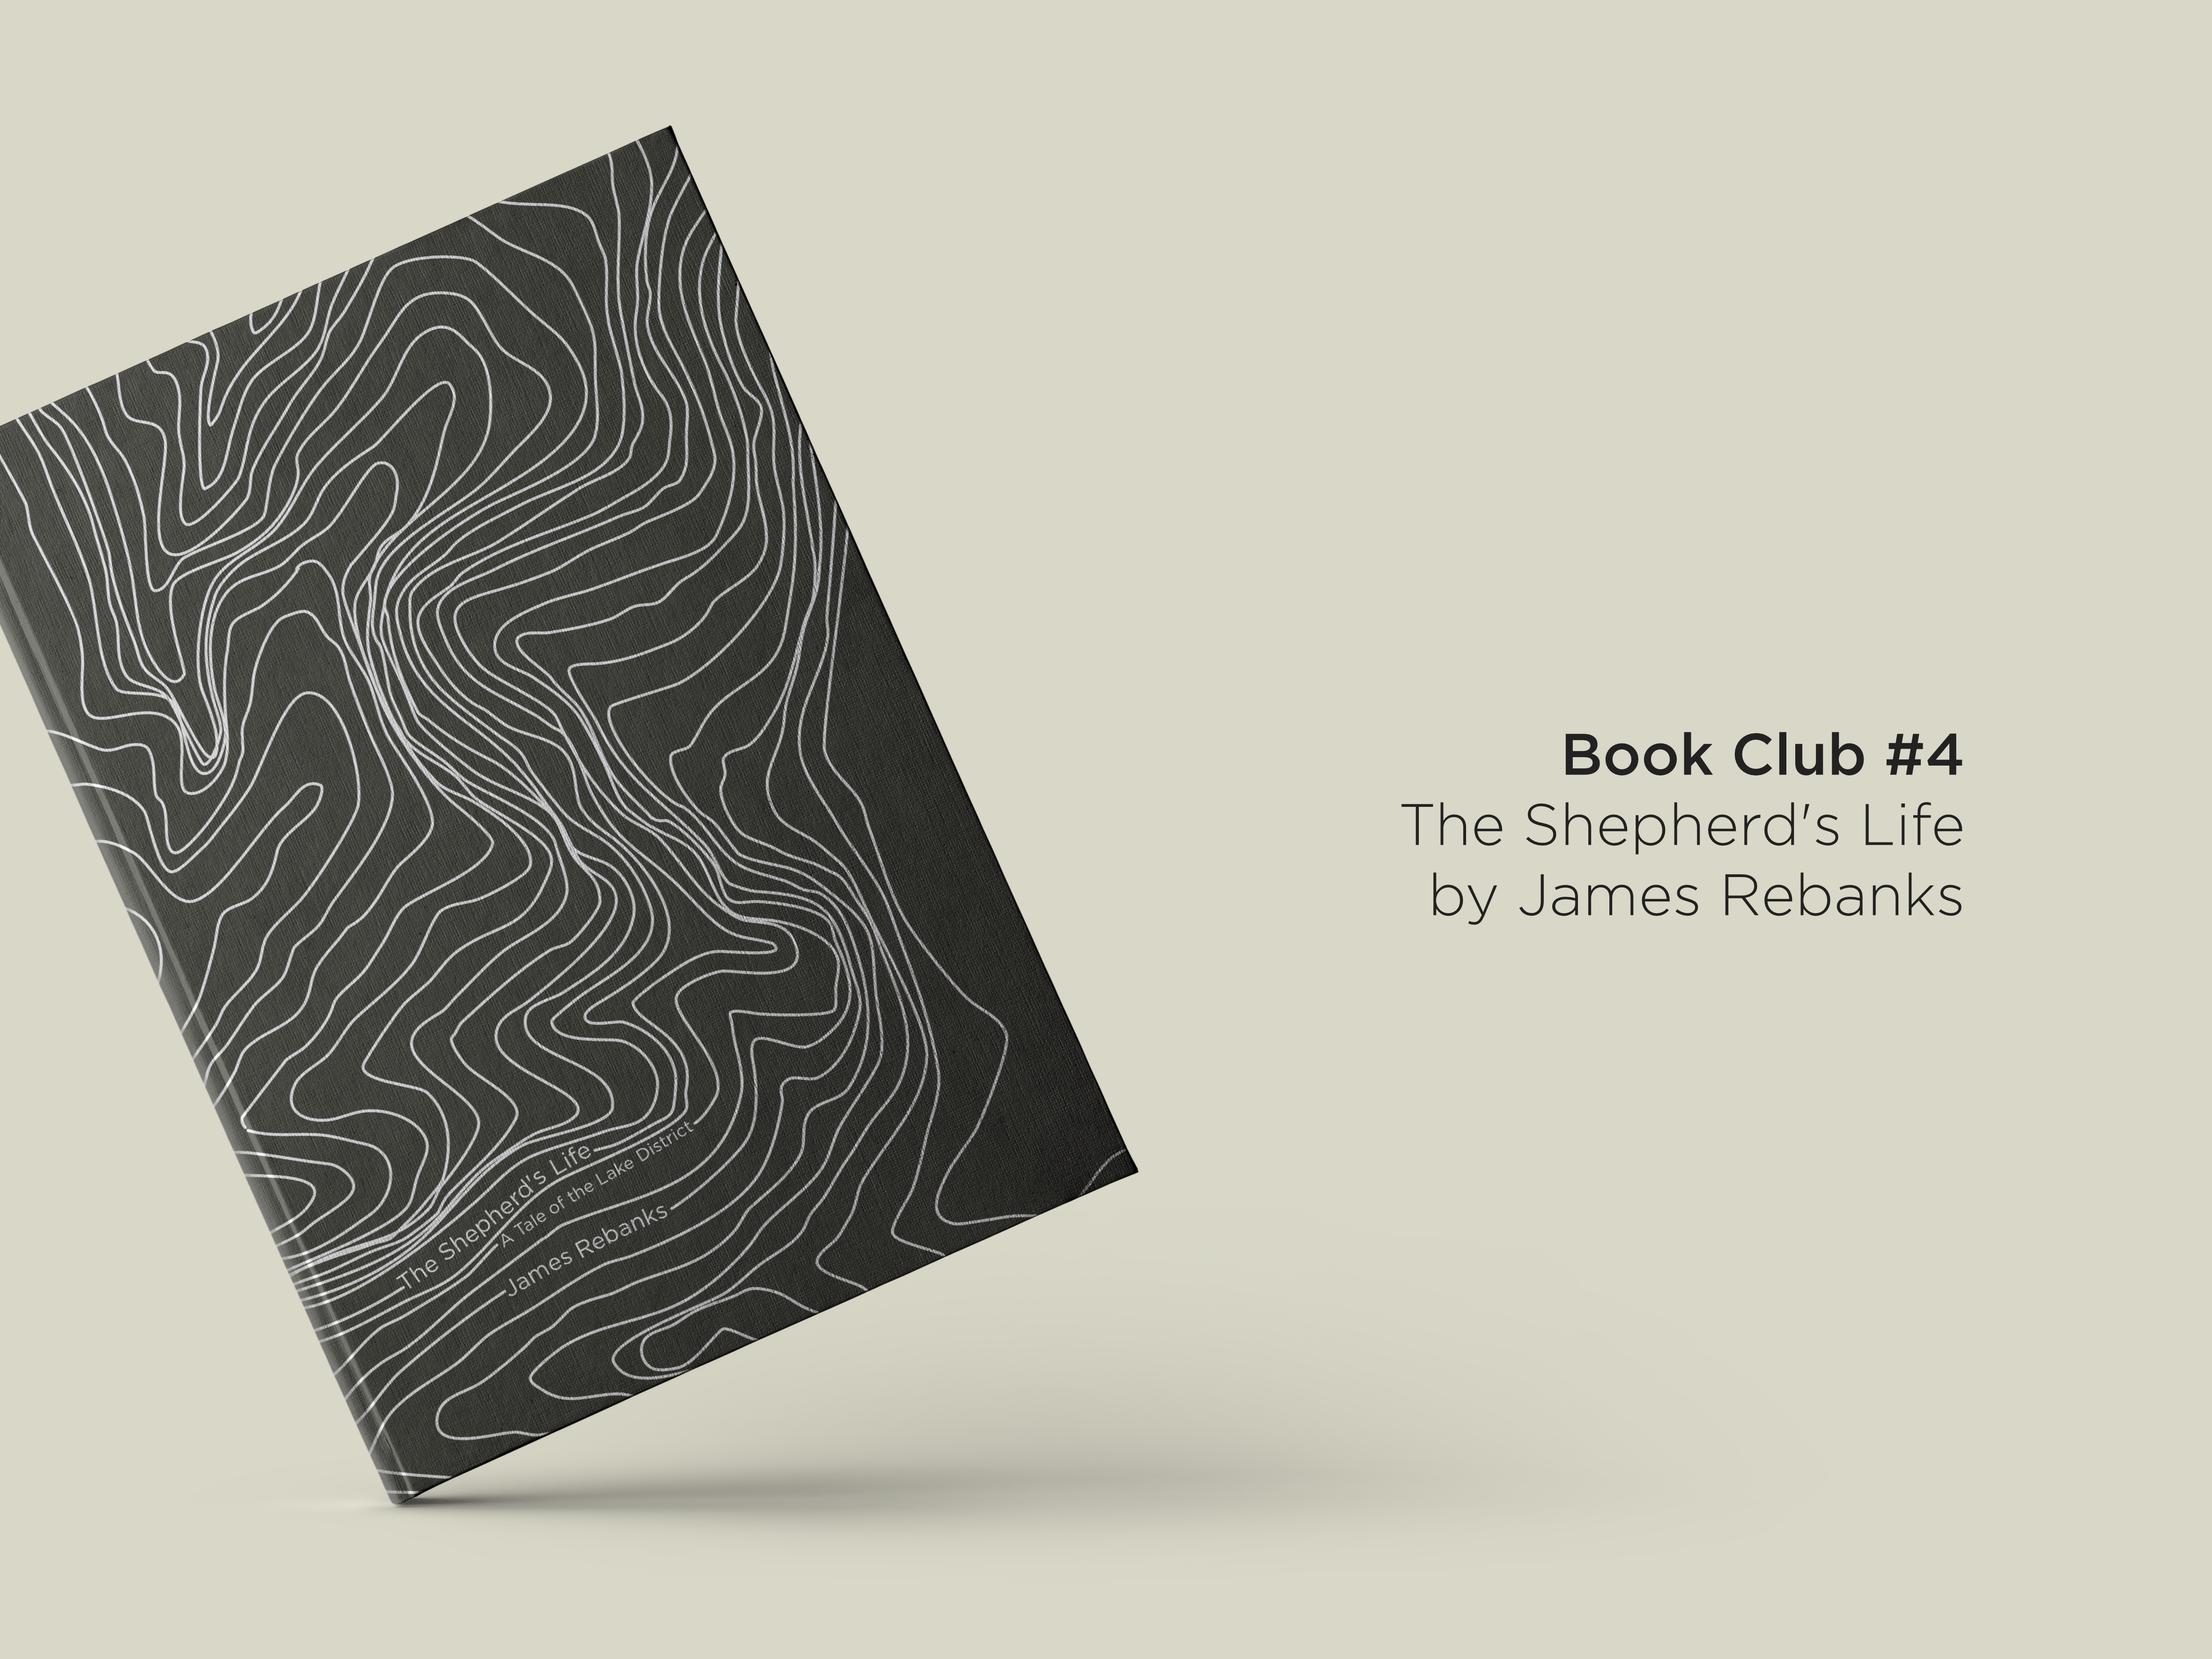 Book Club #4: The Shepherd's Life by James Rebanks